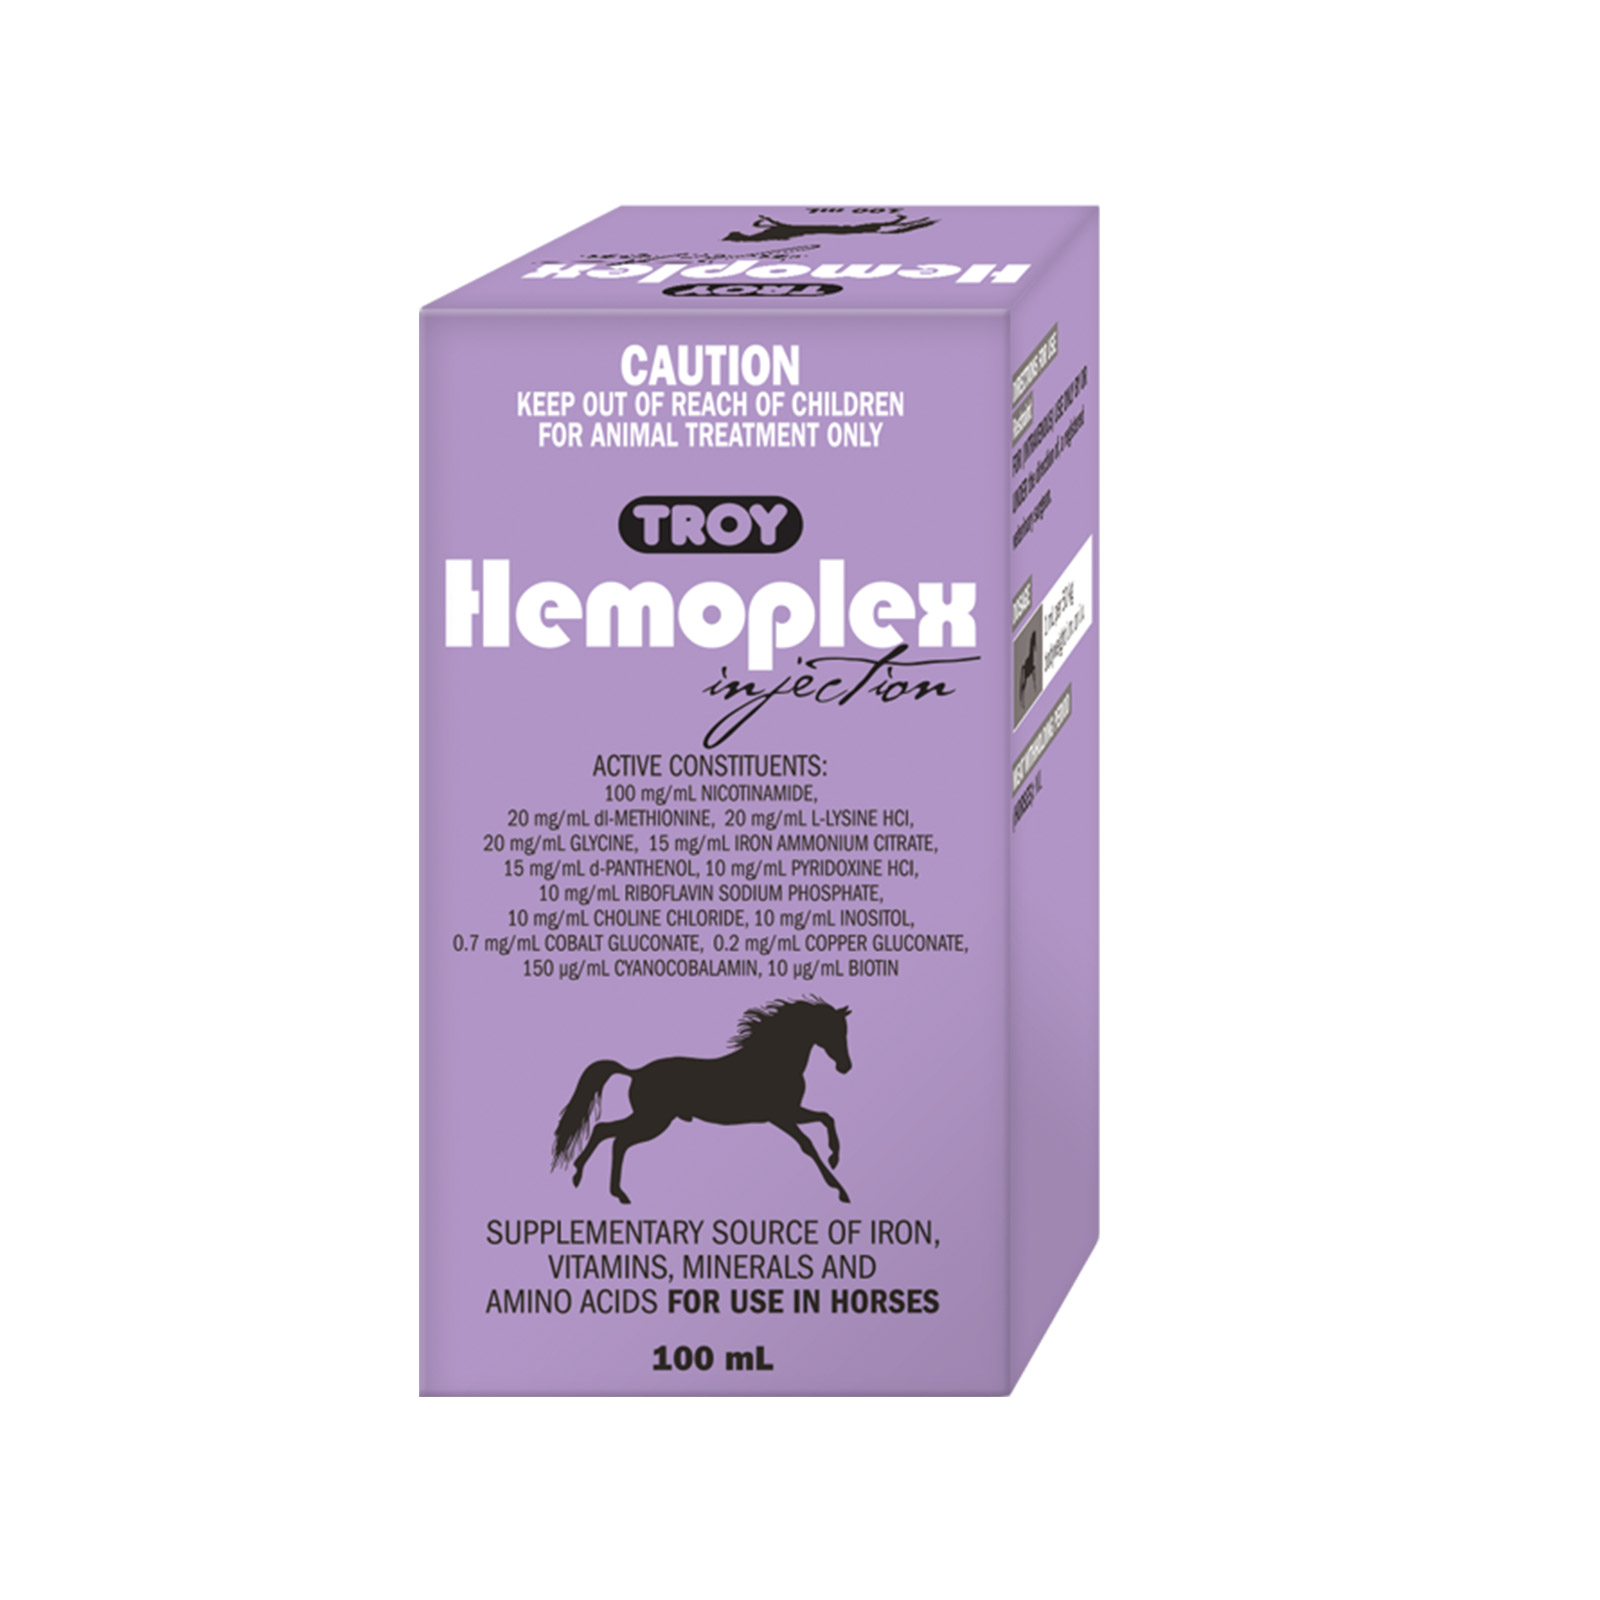 Troy Hemoplex for Horse